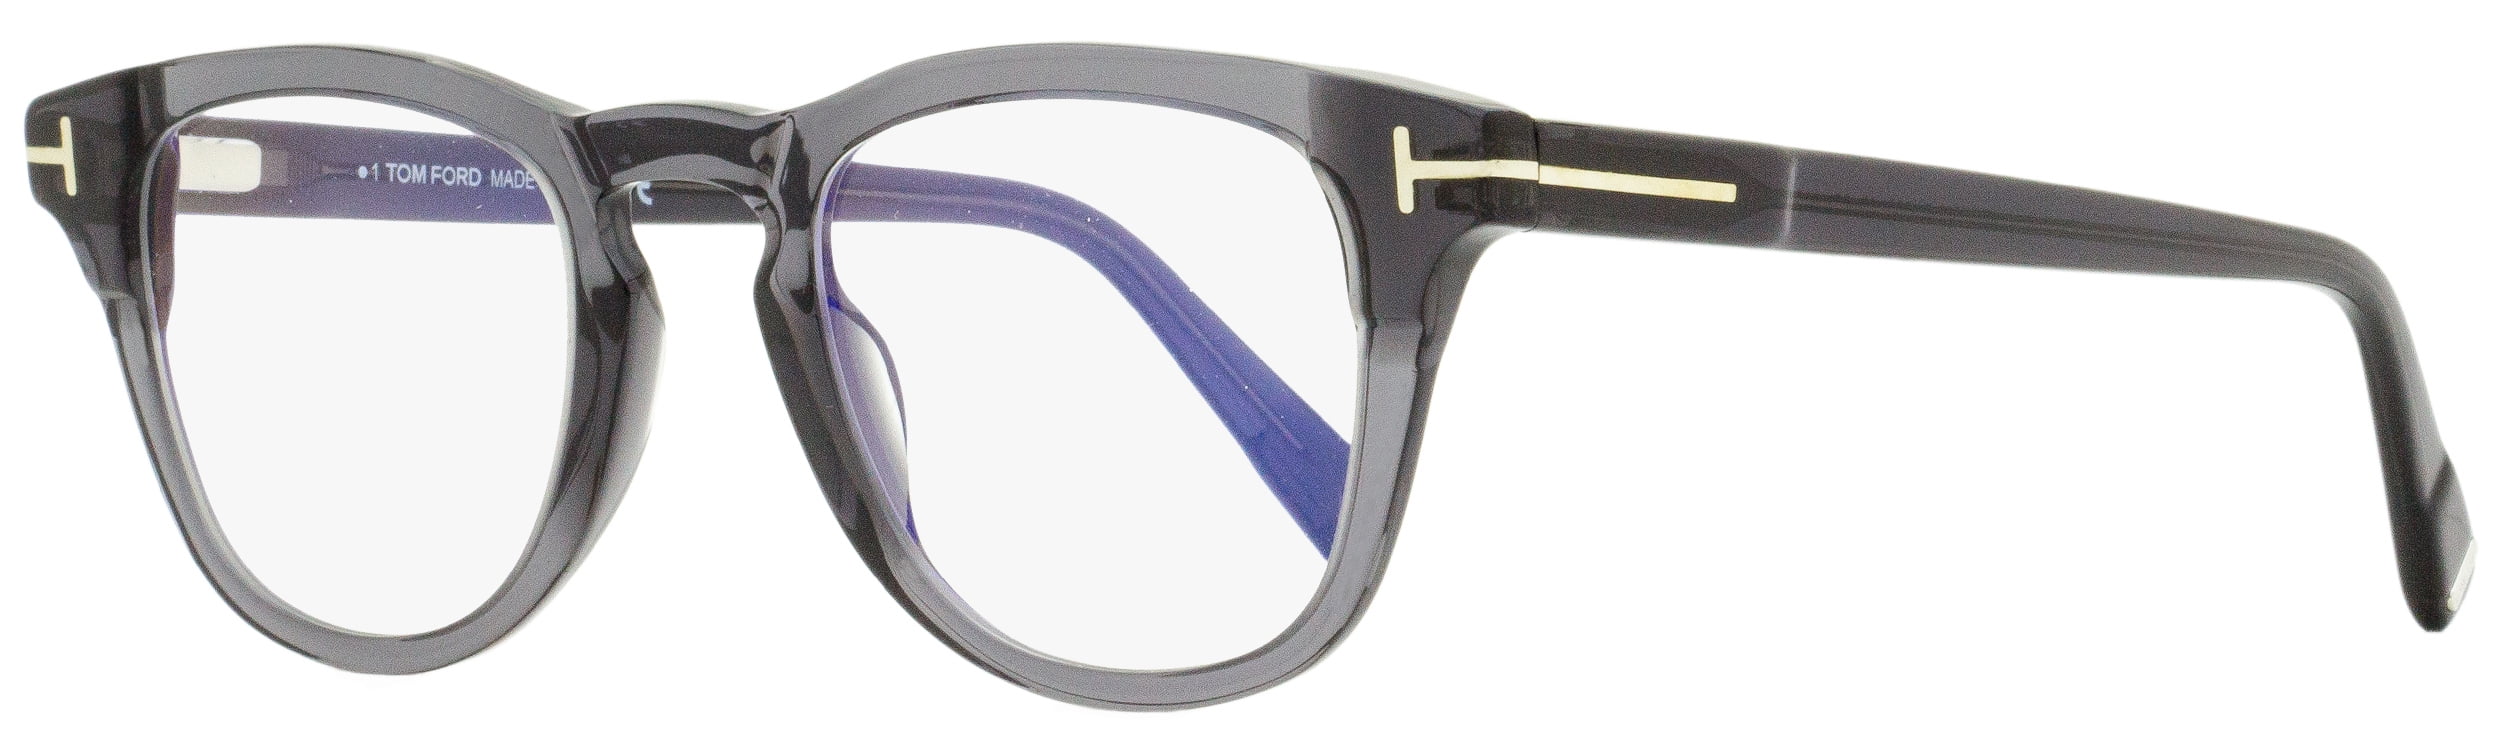 Tom Ford Blue Block Eyeglasses TF5660B 020 Transaparent Gray 49mm ...